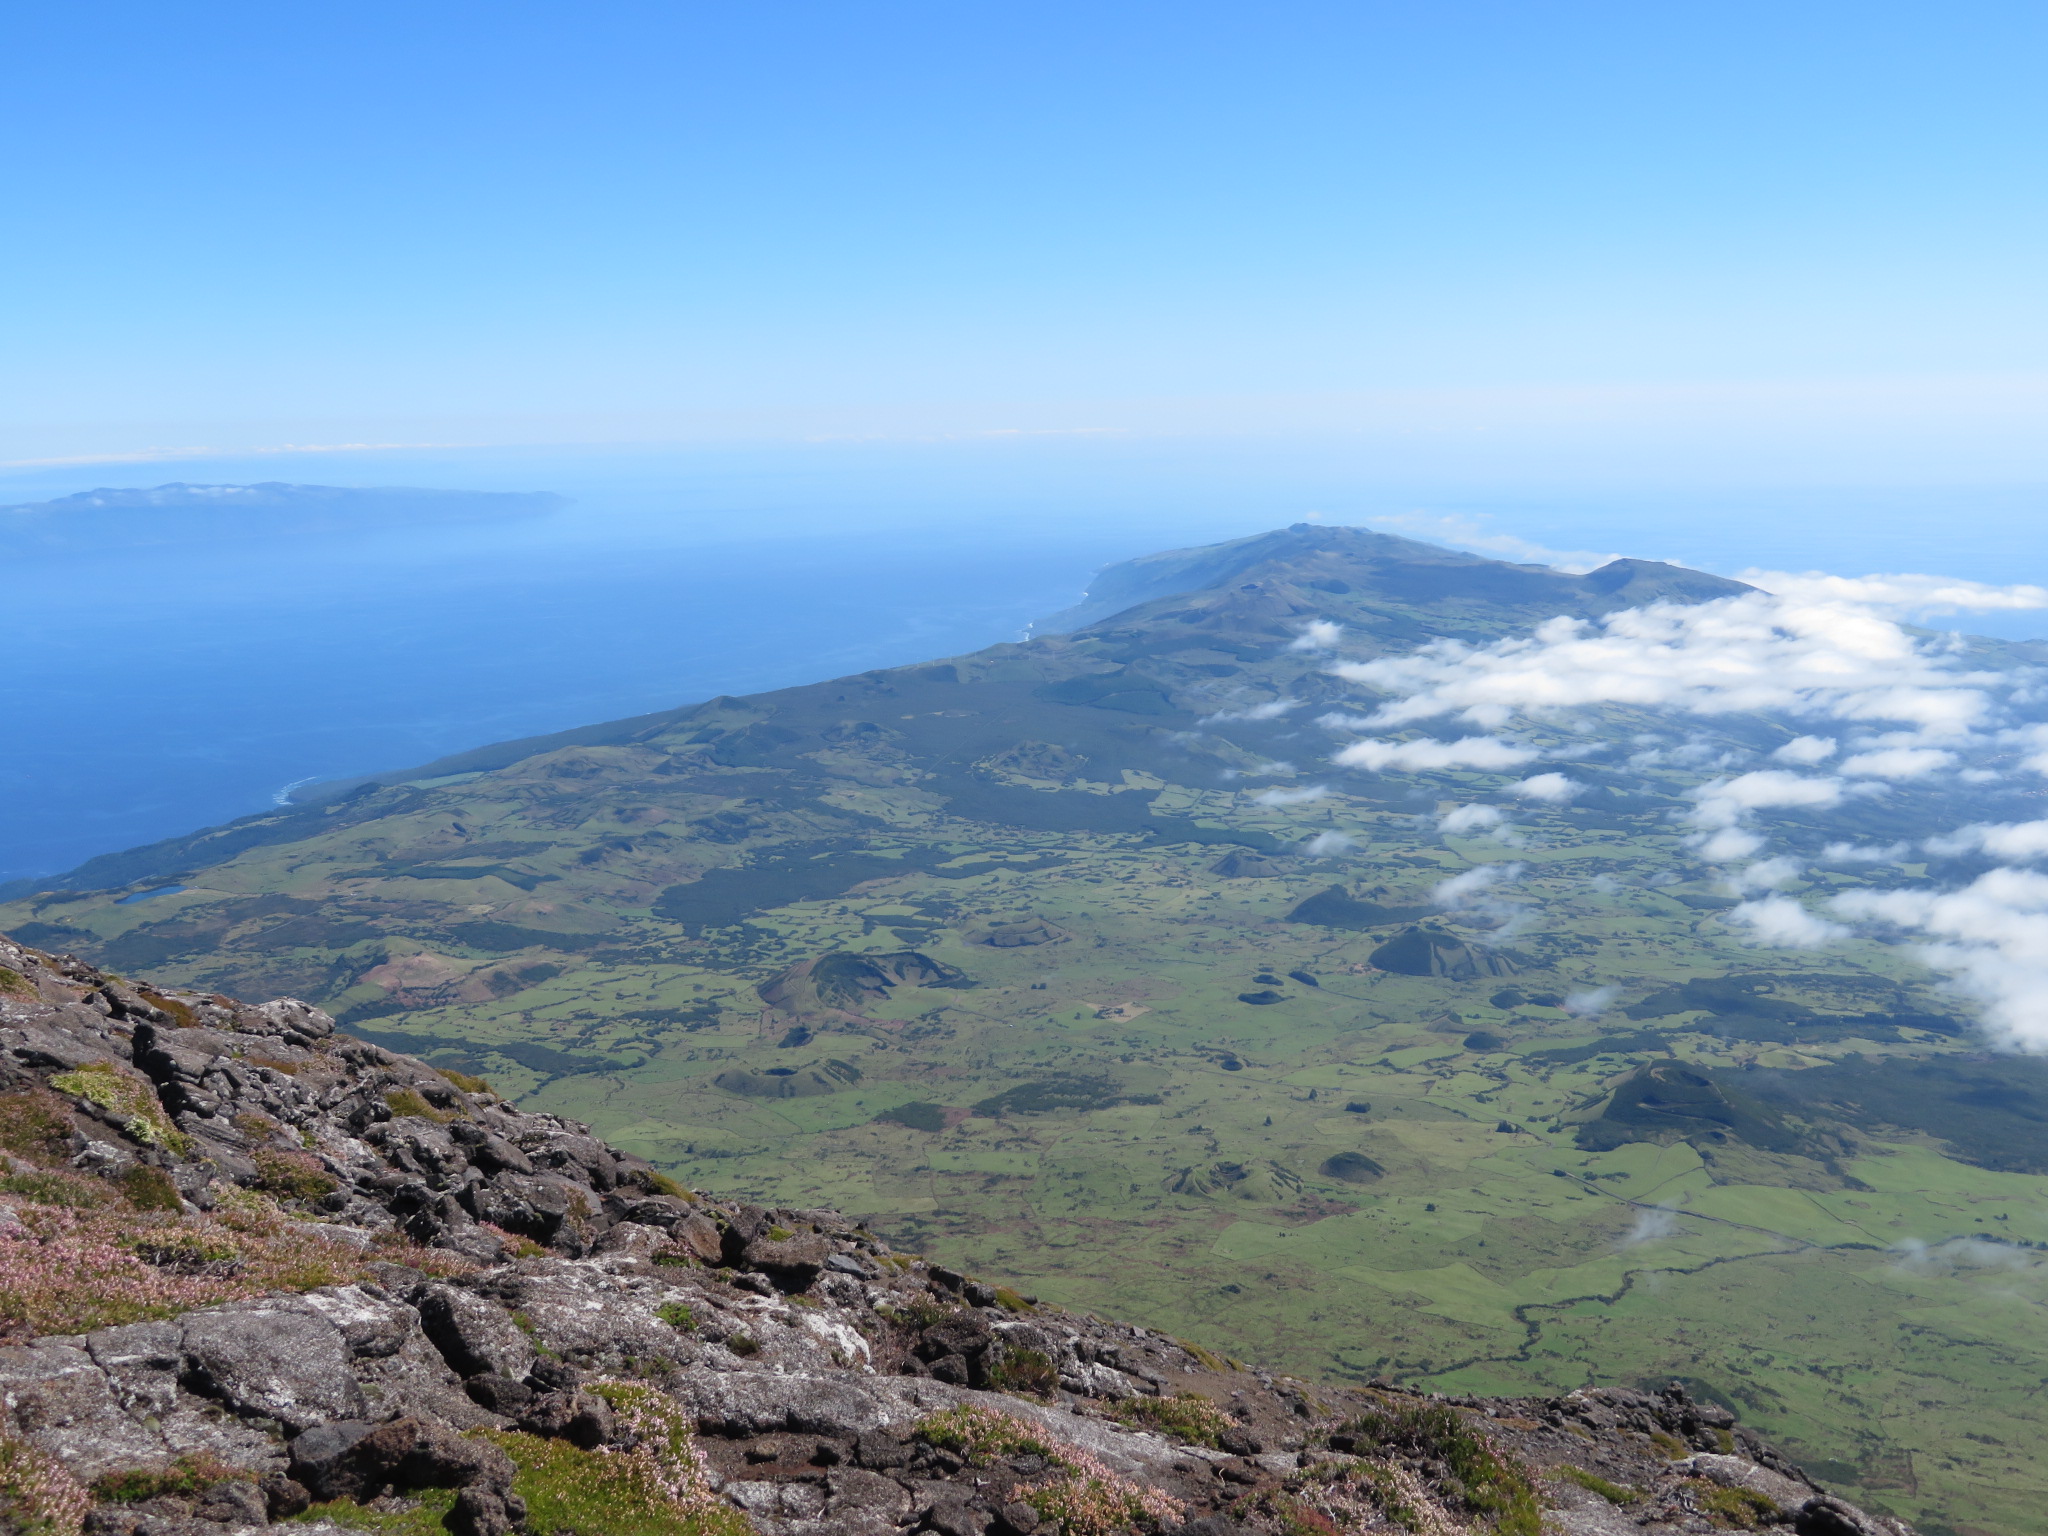 Pico Island
East along Pico island from Volcano crater rim - © William Mackesy